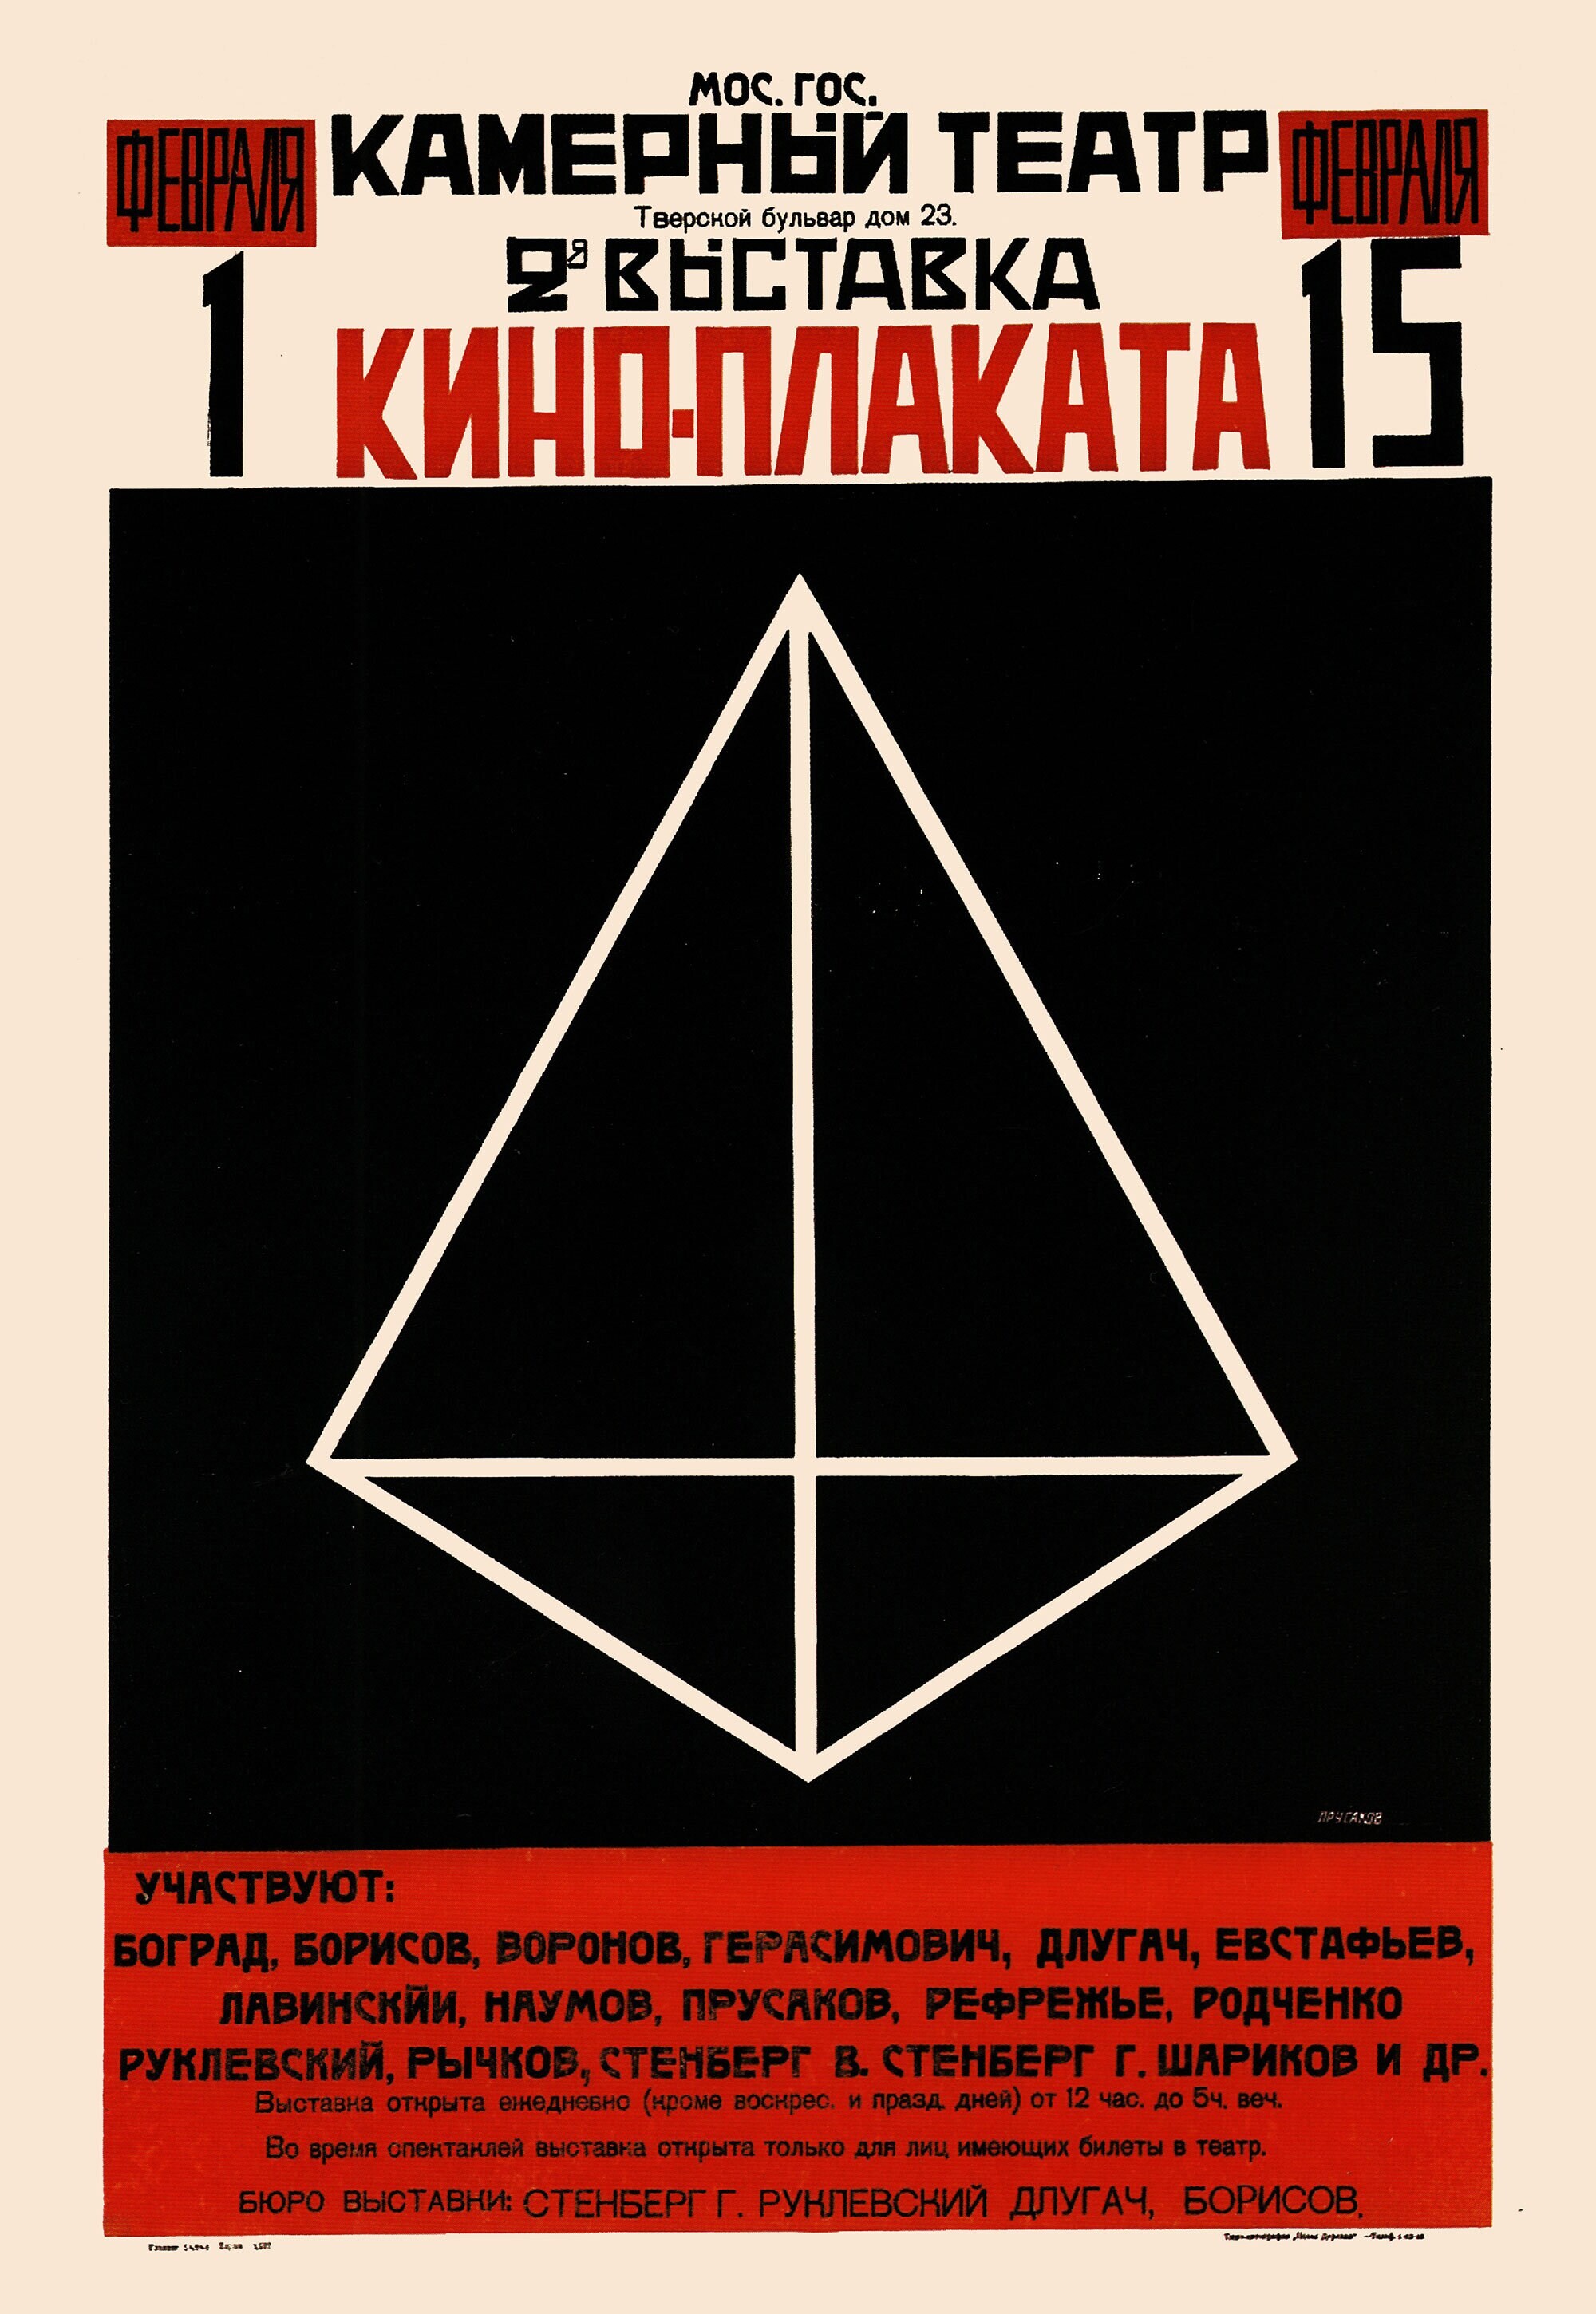 Выставка кино-плаката, 1926 год, плакат, автор Николай Прусаков (авангардное советское искусство, 1920-е)